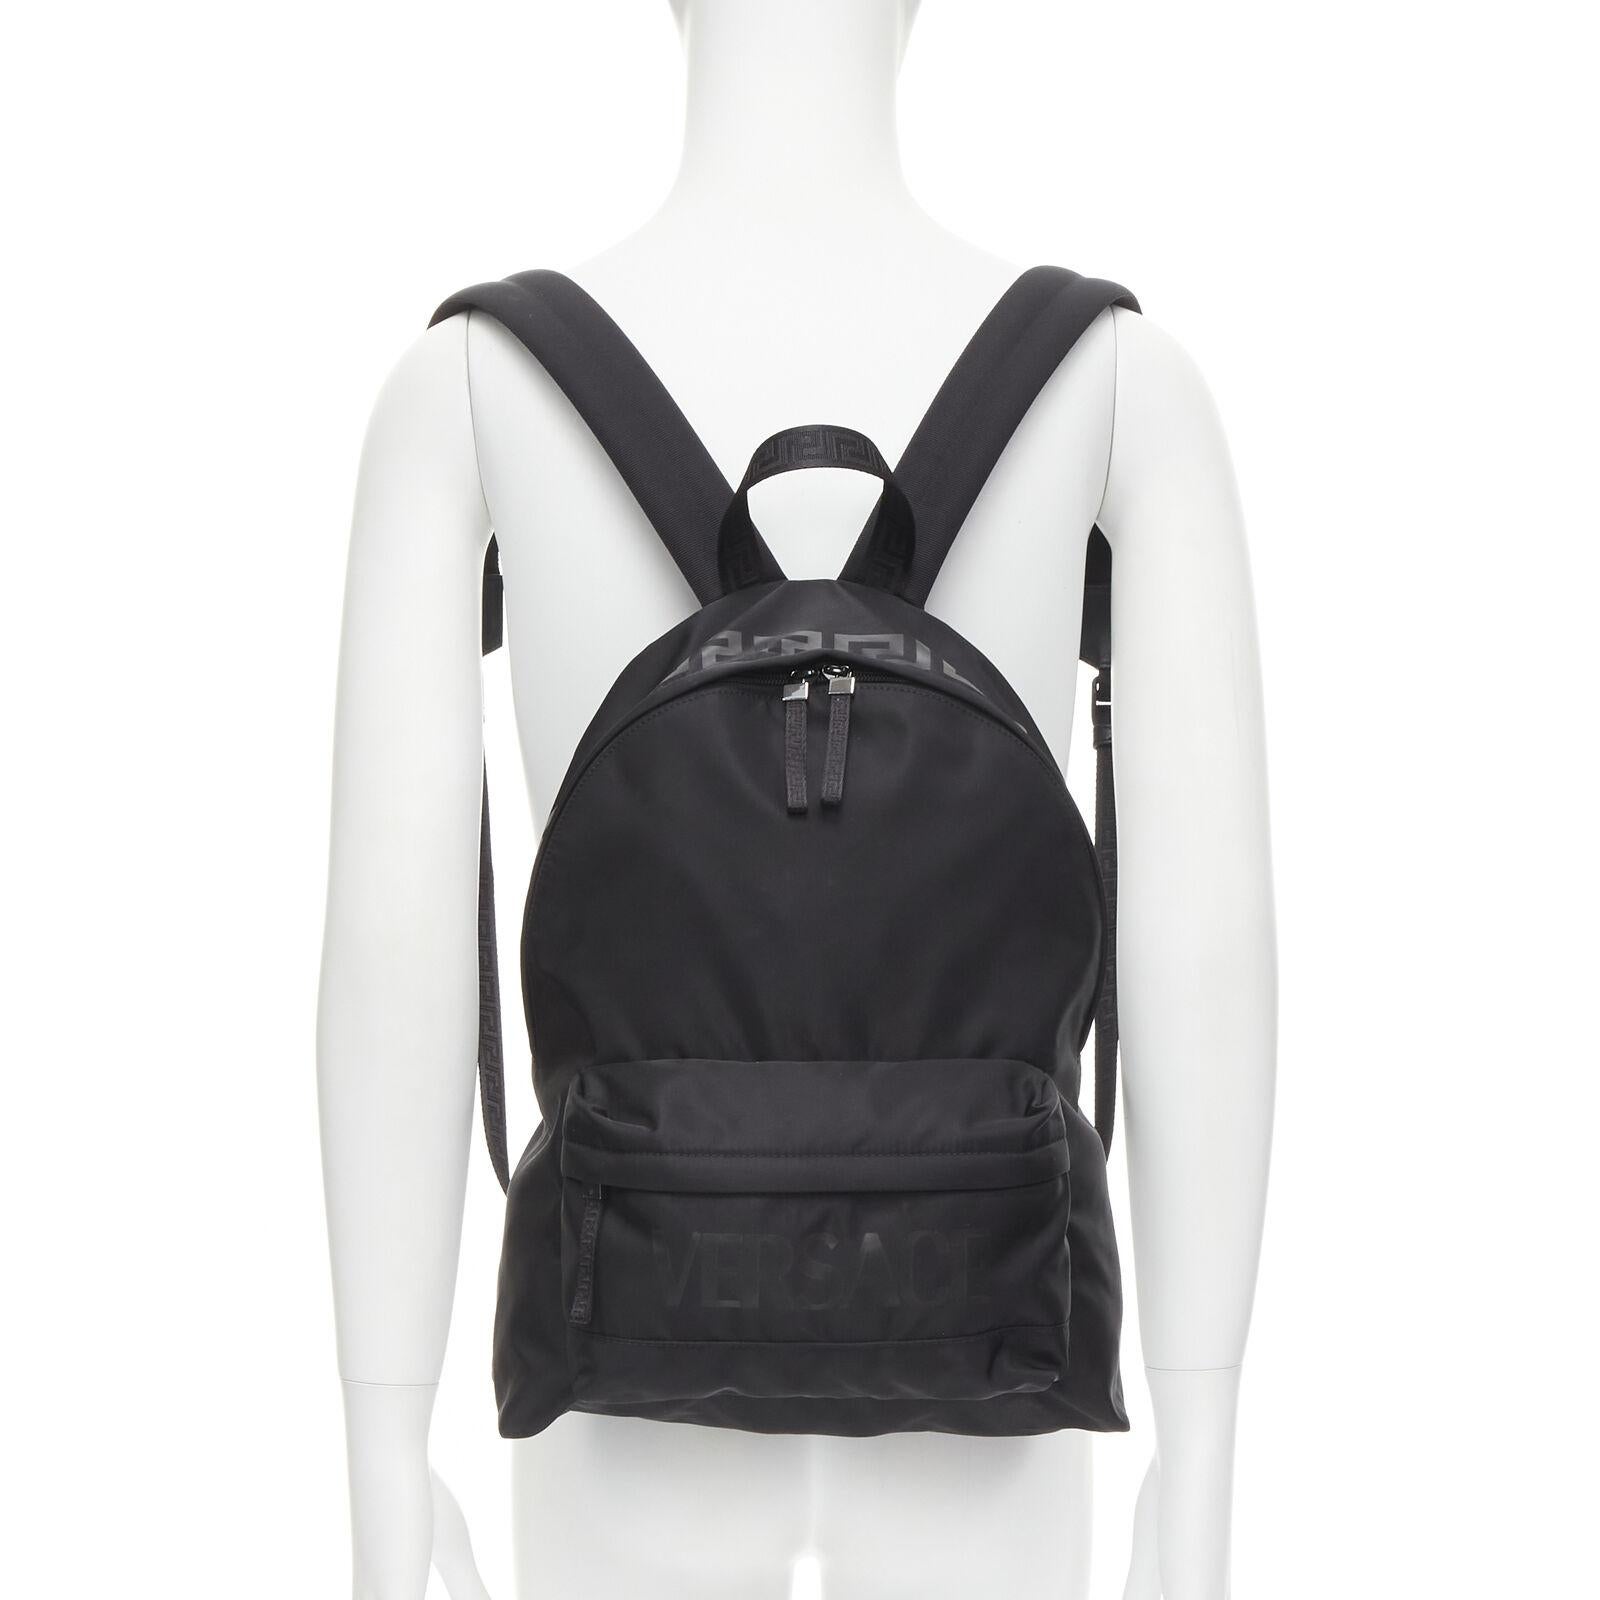 new VERSACE La Greca 90's logo black nylon backpack bag
Reference: TGAS/C00584
Brand: Versace
Designer: Donatella Versace
Model: 1002886 1A02180 2B77E
Collection: La Greca
Material: Nylon
Color: Black
Pattern: Solid
Closure: Zip
Lining: Fabric
Extra